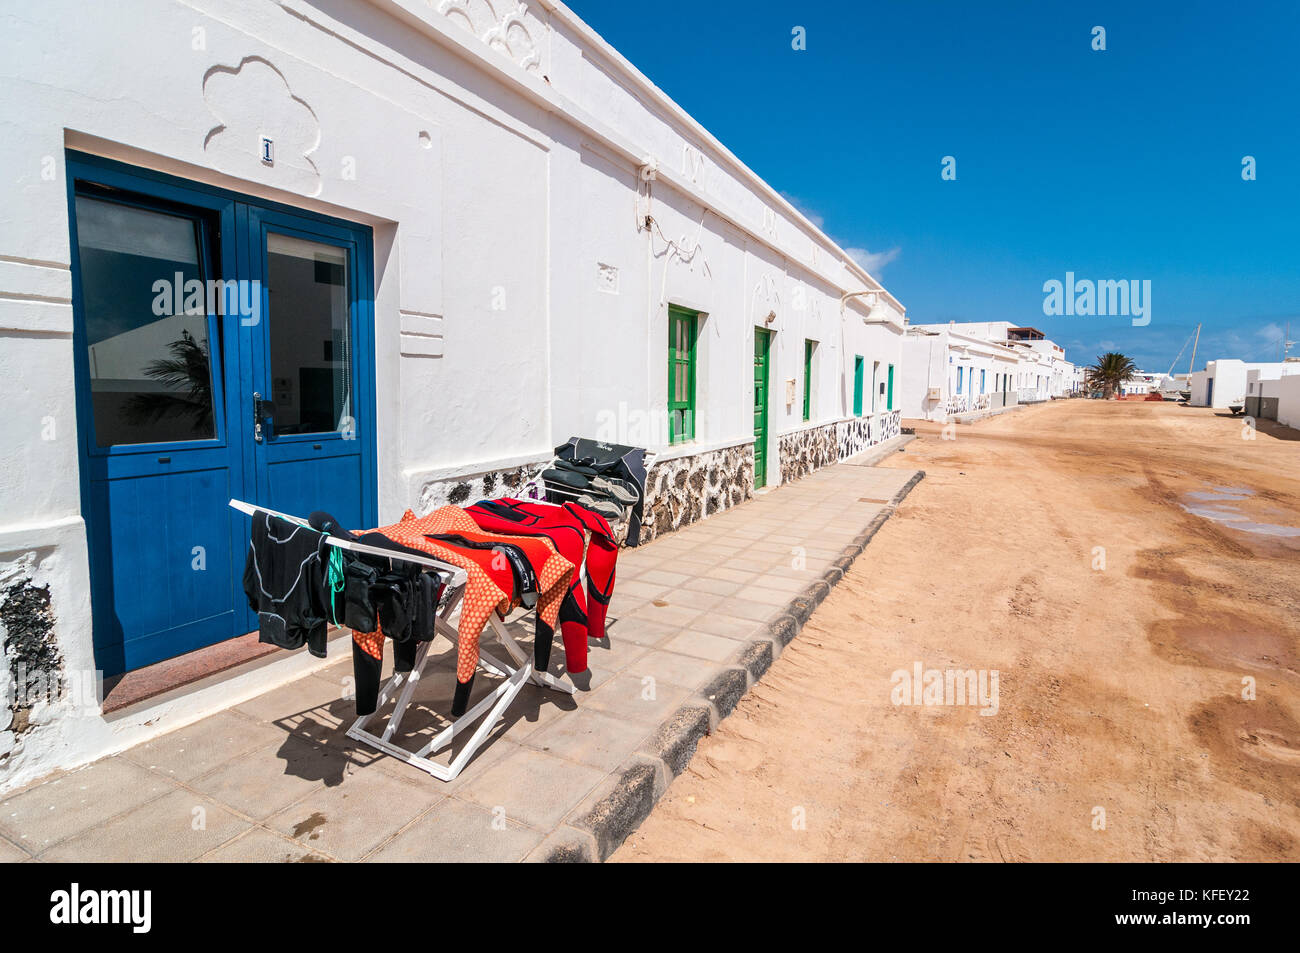 Le séchage de l'équipement de plongée au milieu de la rue, Caleta del Sebo, La Graciosa, îles de Canaries, Espagne Banque D'Images